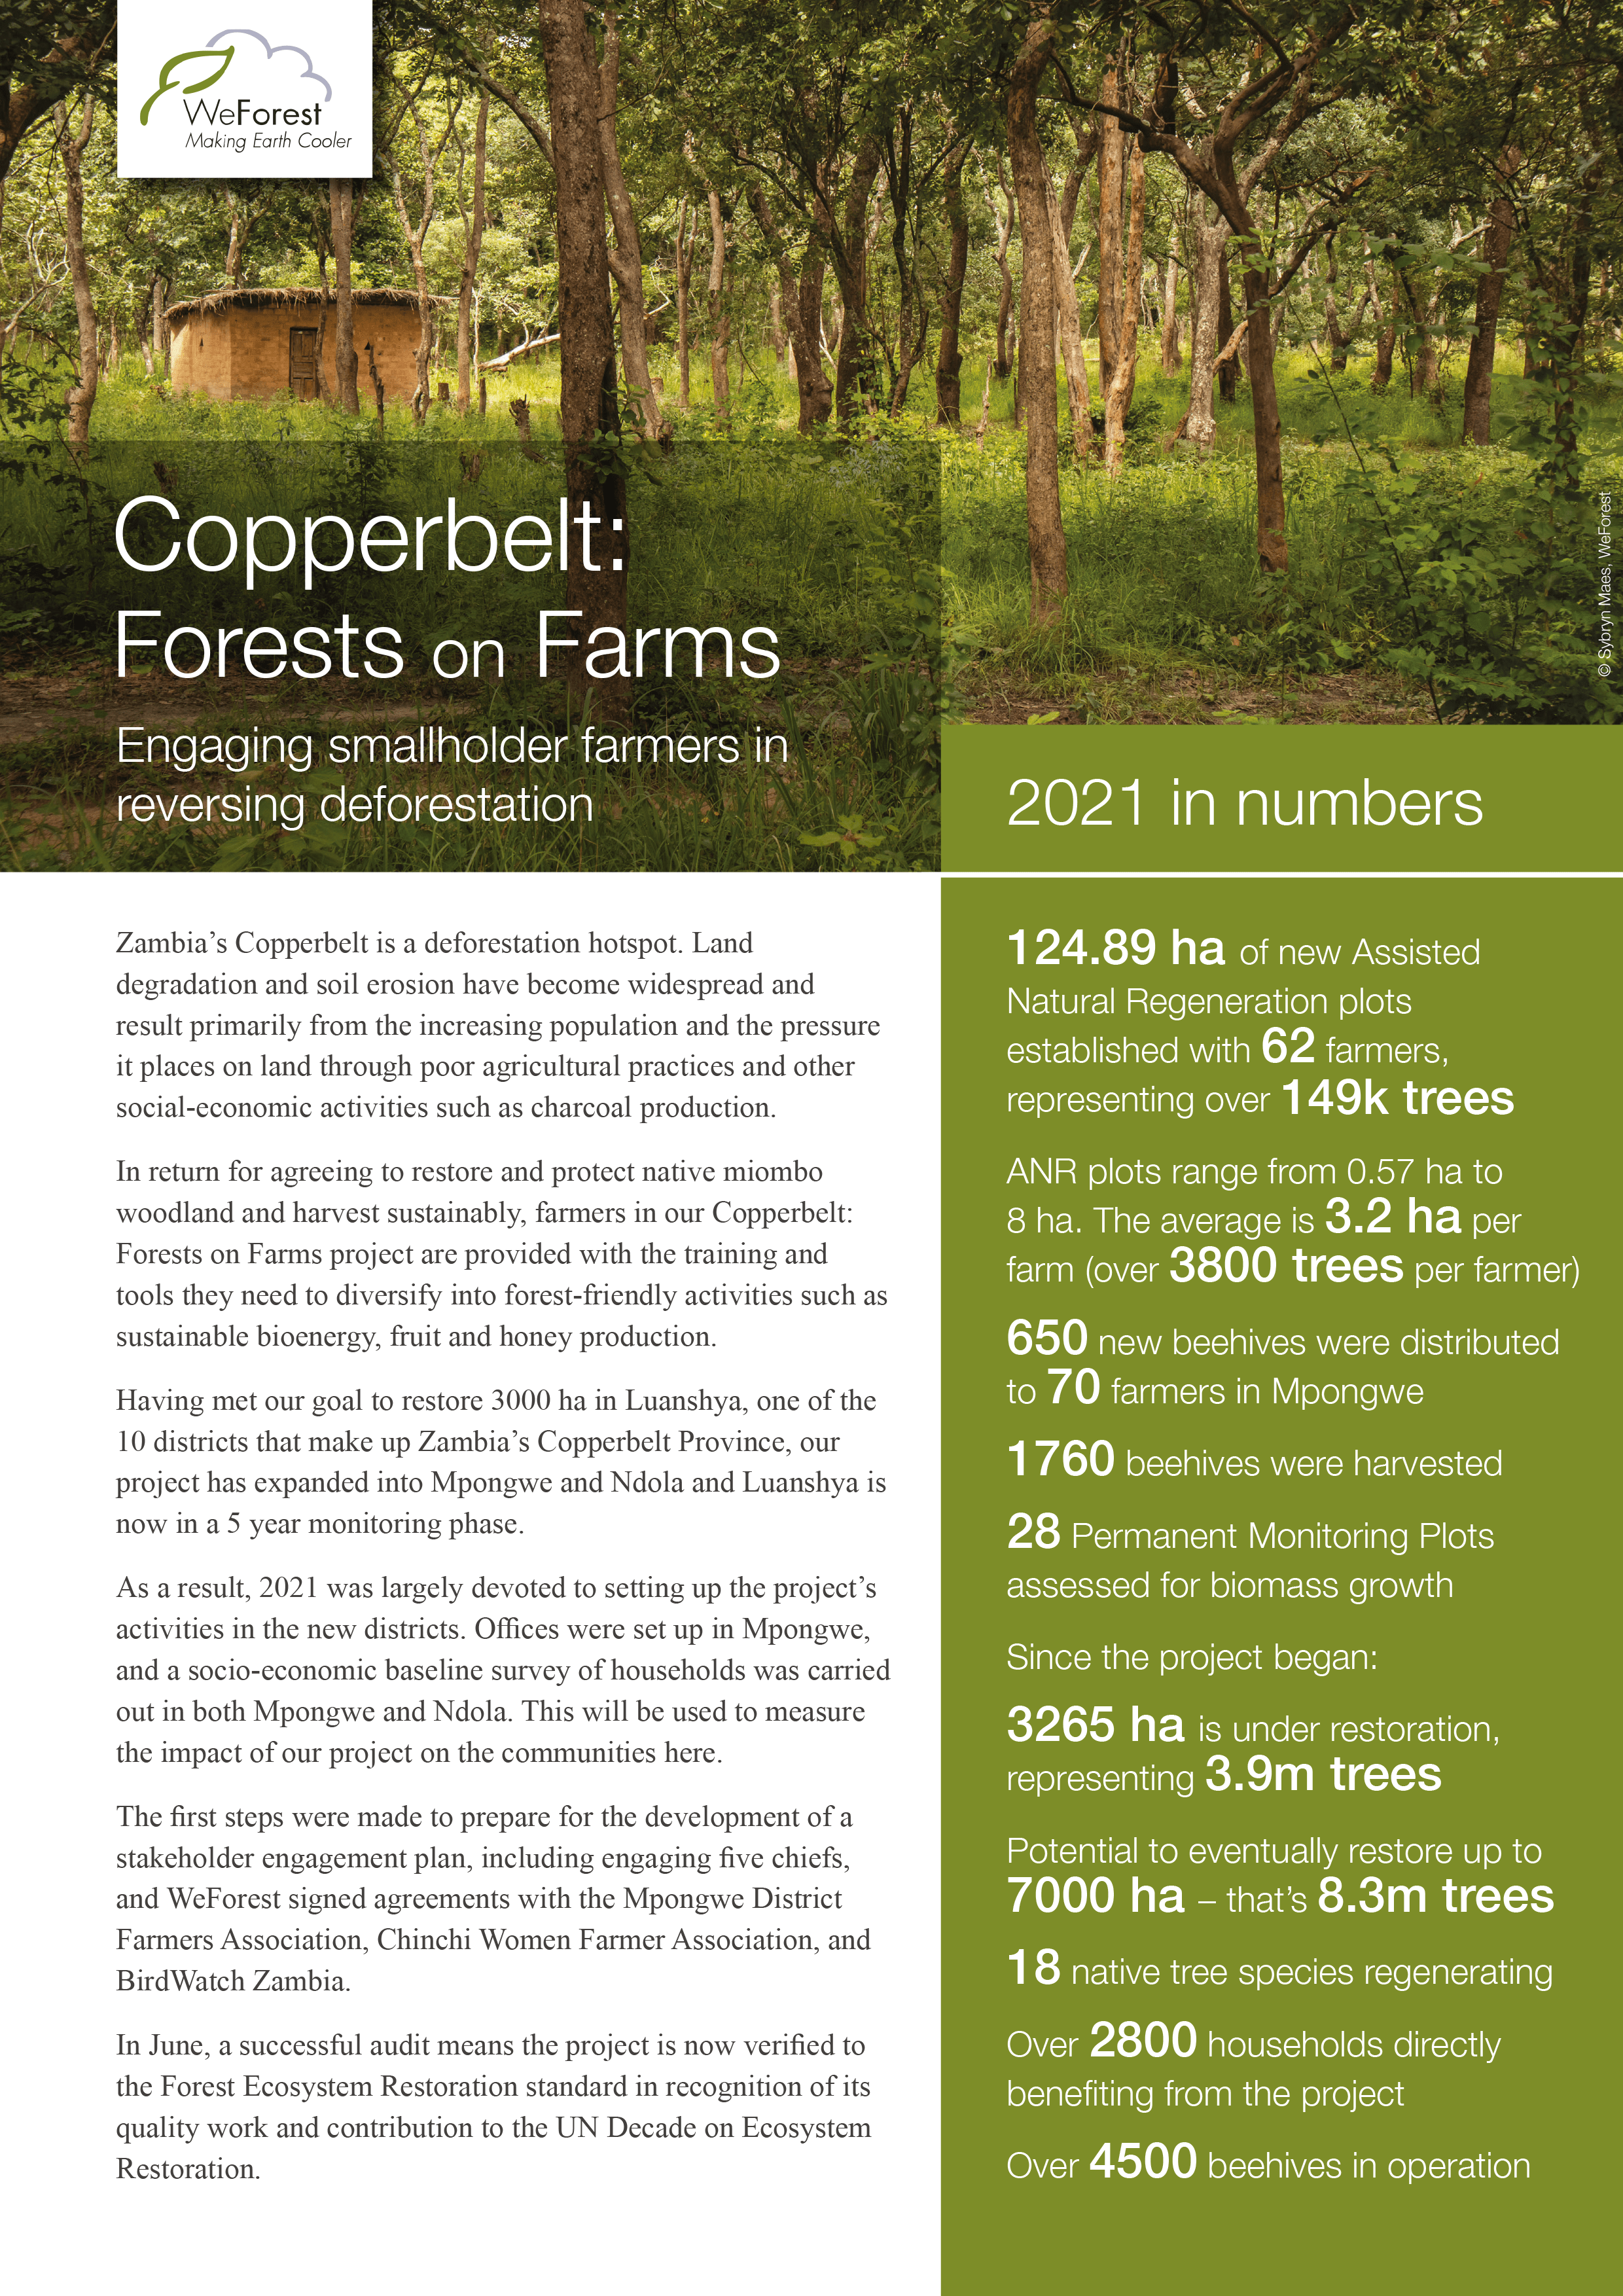 WeForestFullYear2021_Copperbelt_summary-min.png